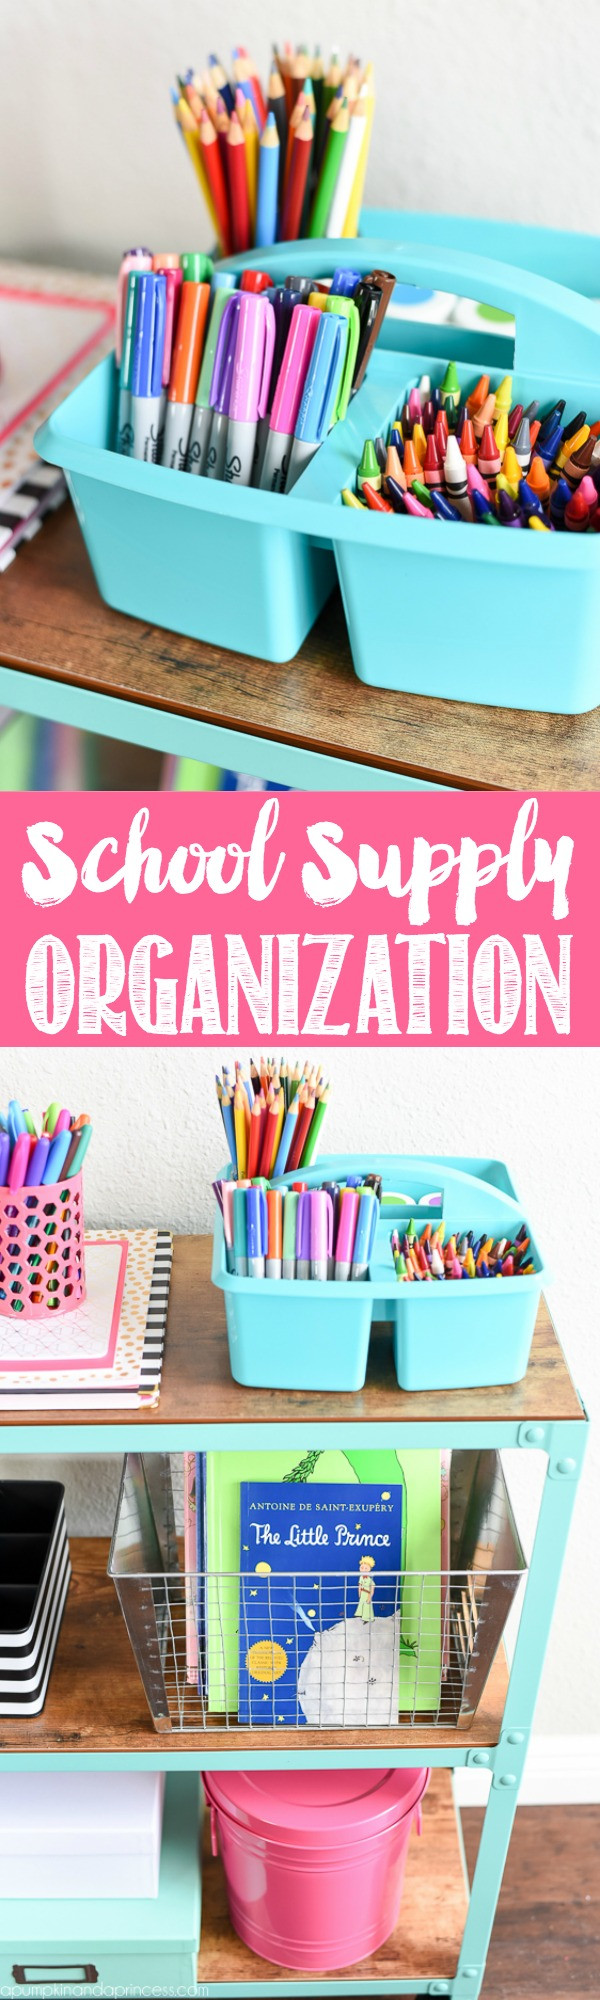 School Organization Ideas
 School Supply Organization A Pumpkin And A Princess